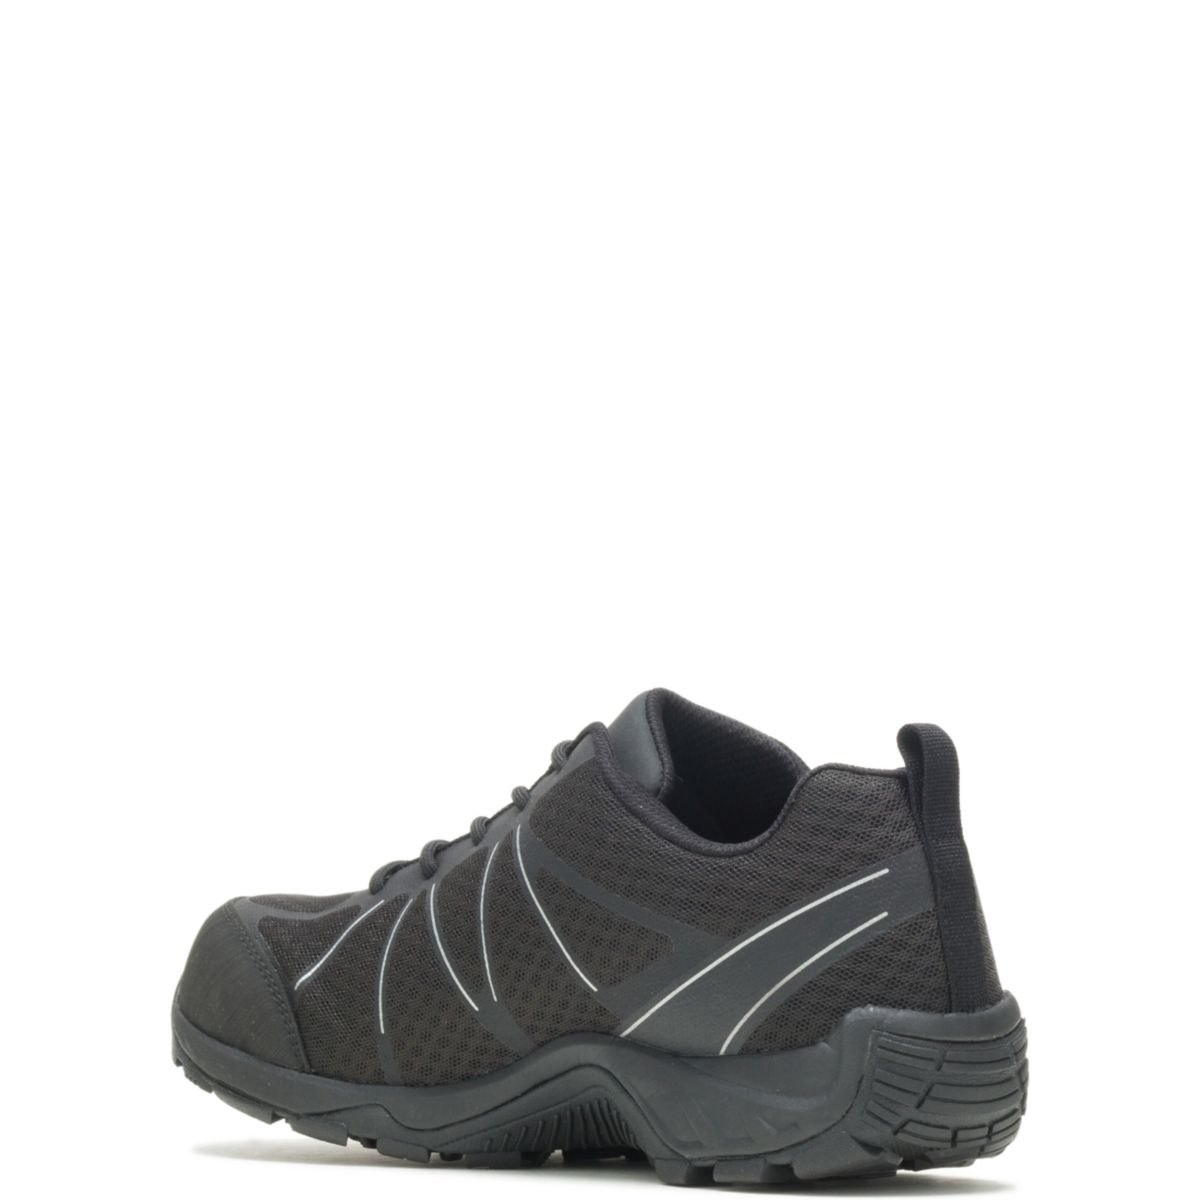 WOLVERINE Men's Amherst II CarbonMAXÂ® Composite Toe Work Shoe Black - W201147 BLACK - BLACK, 11.5